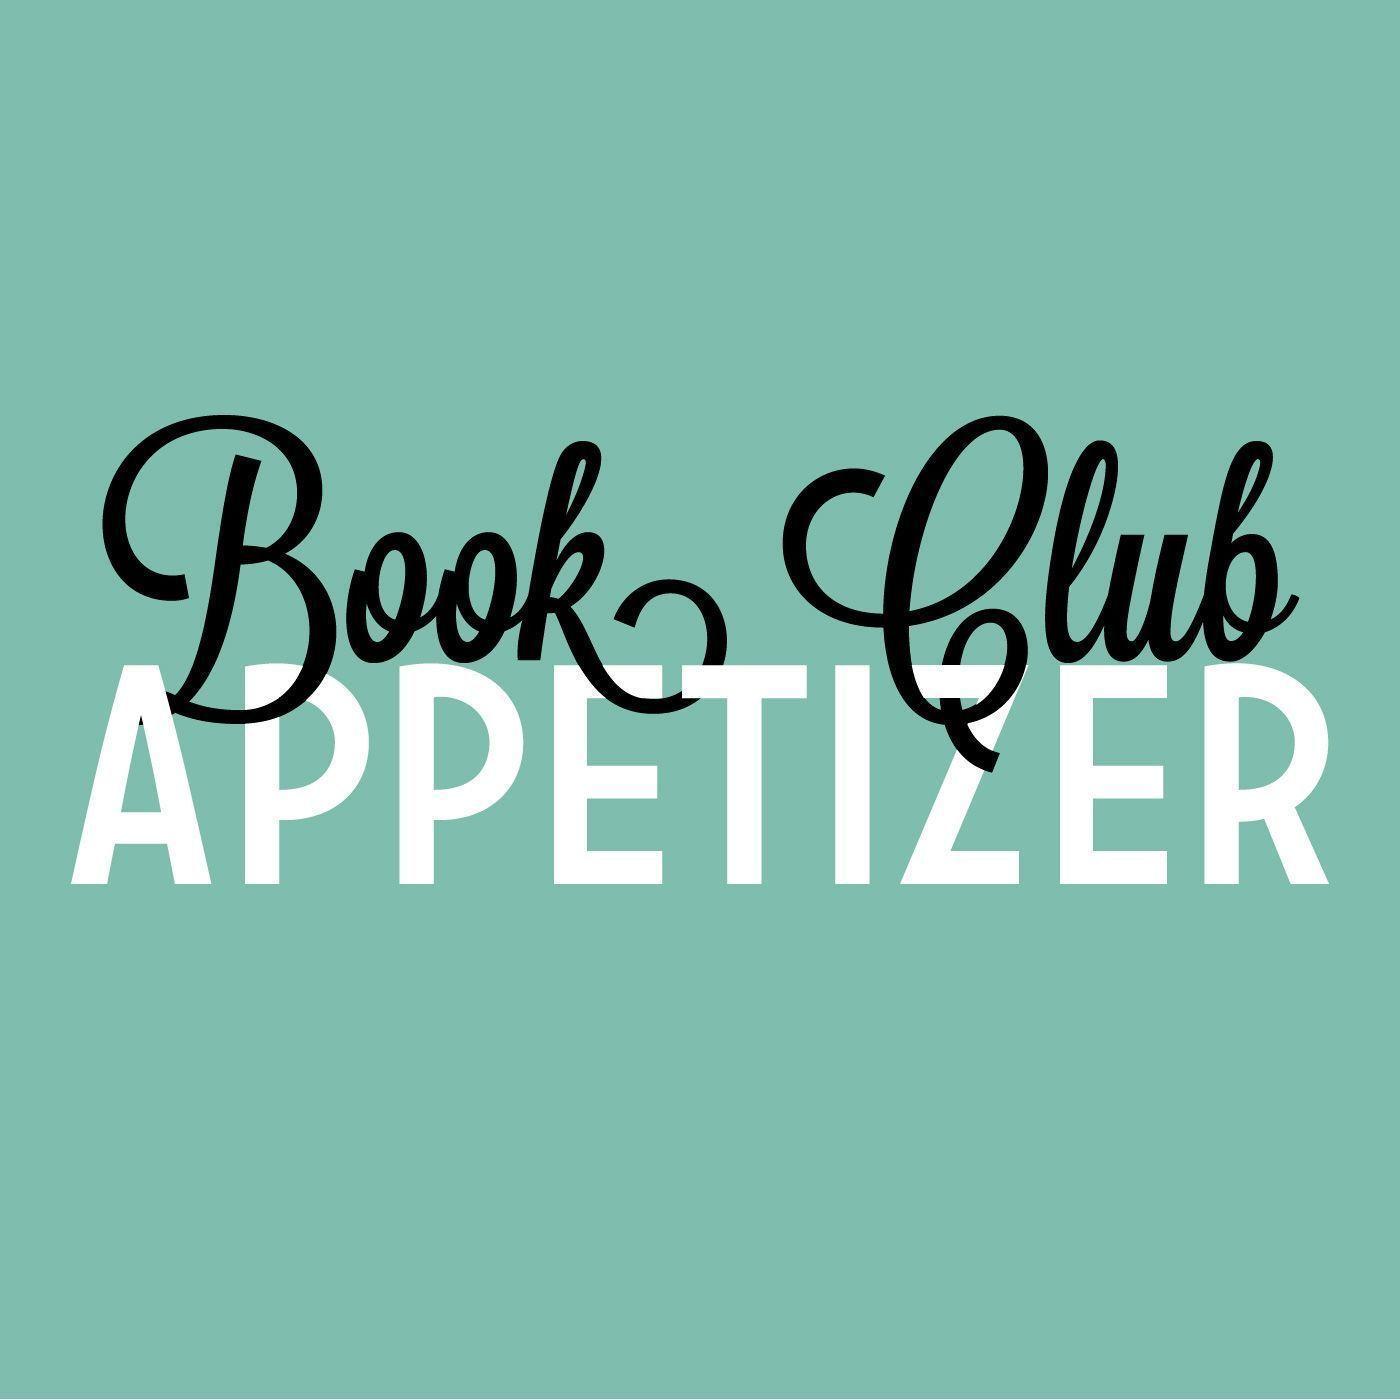 Appetizer Logo - pod. fanatic. Podcast: Book Club Appetizer